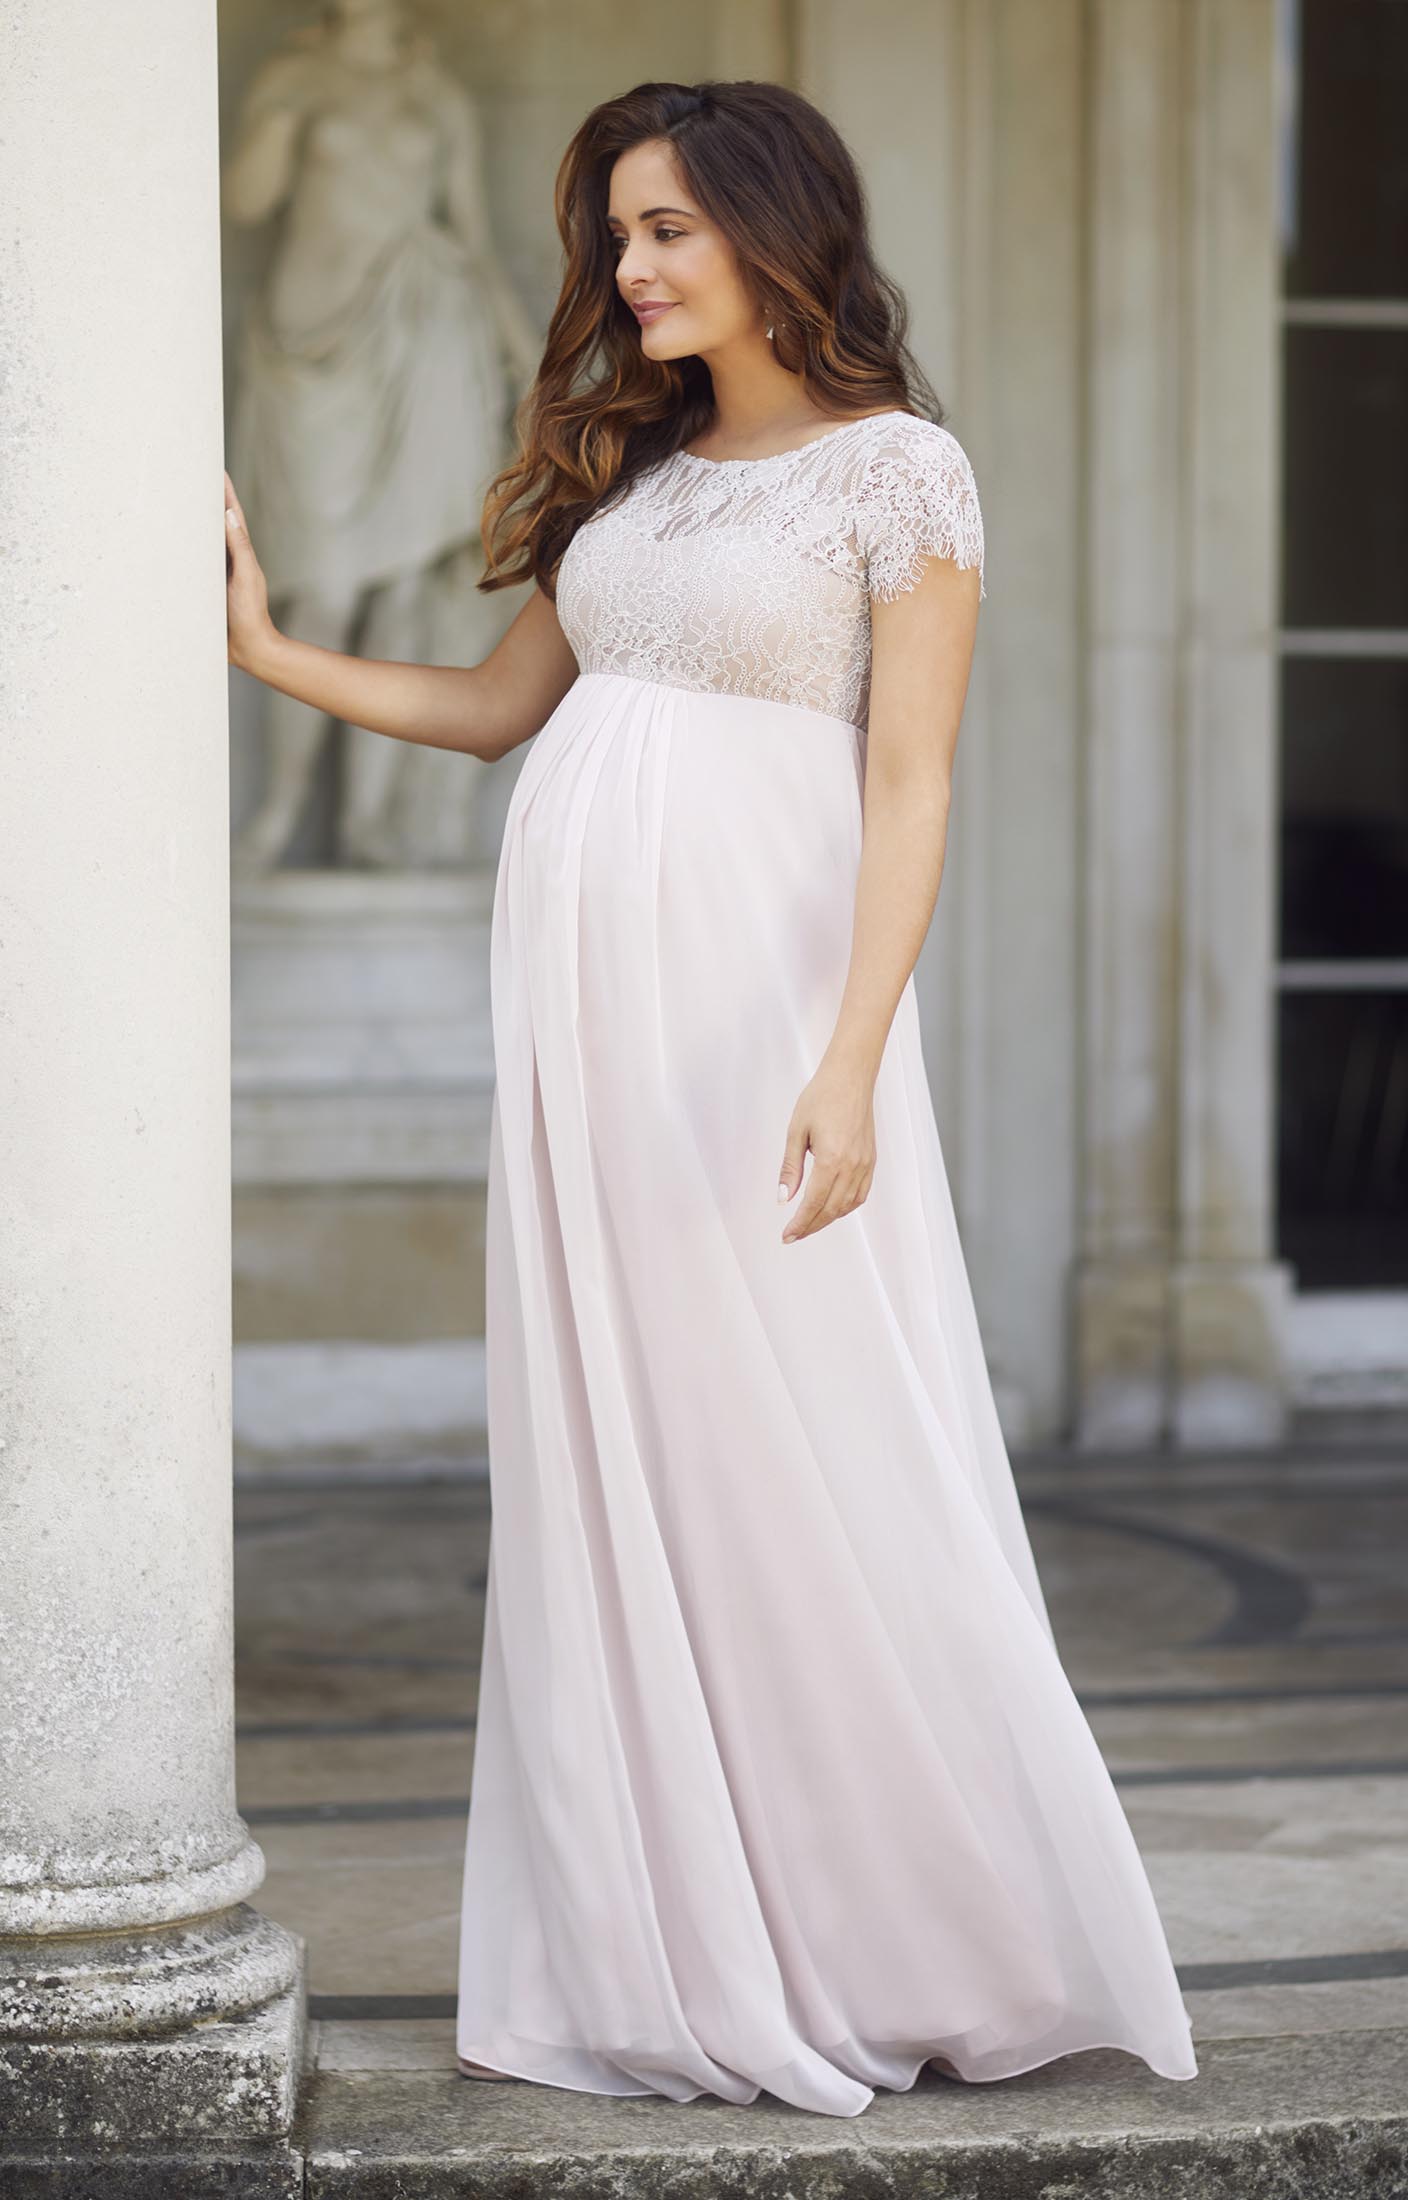 Tiffany Rose Maternity Gown Elizabeth Soft Mist Pink